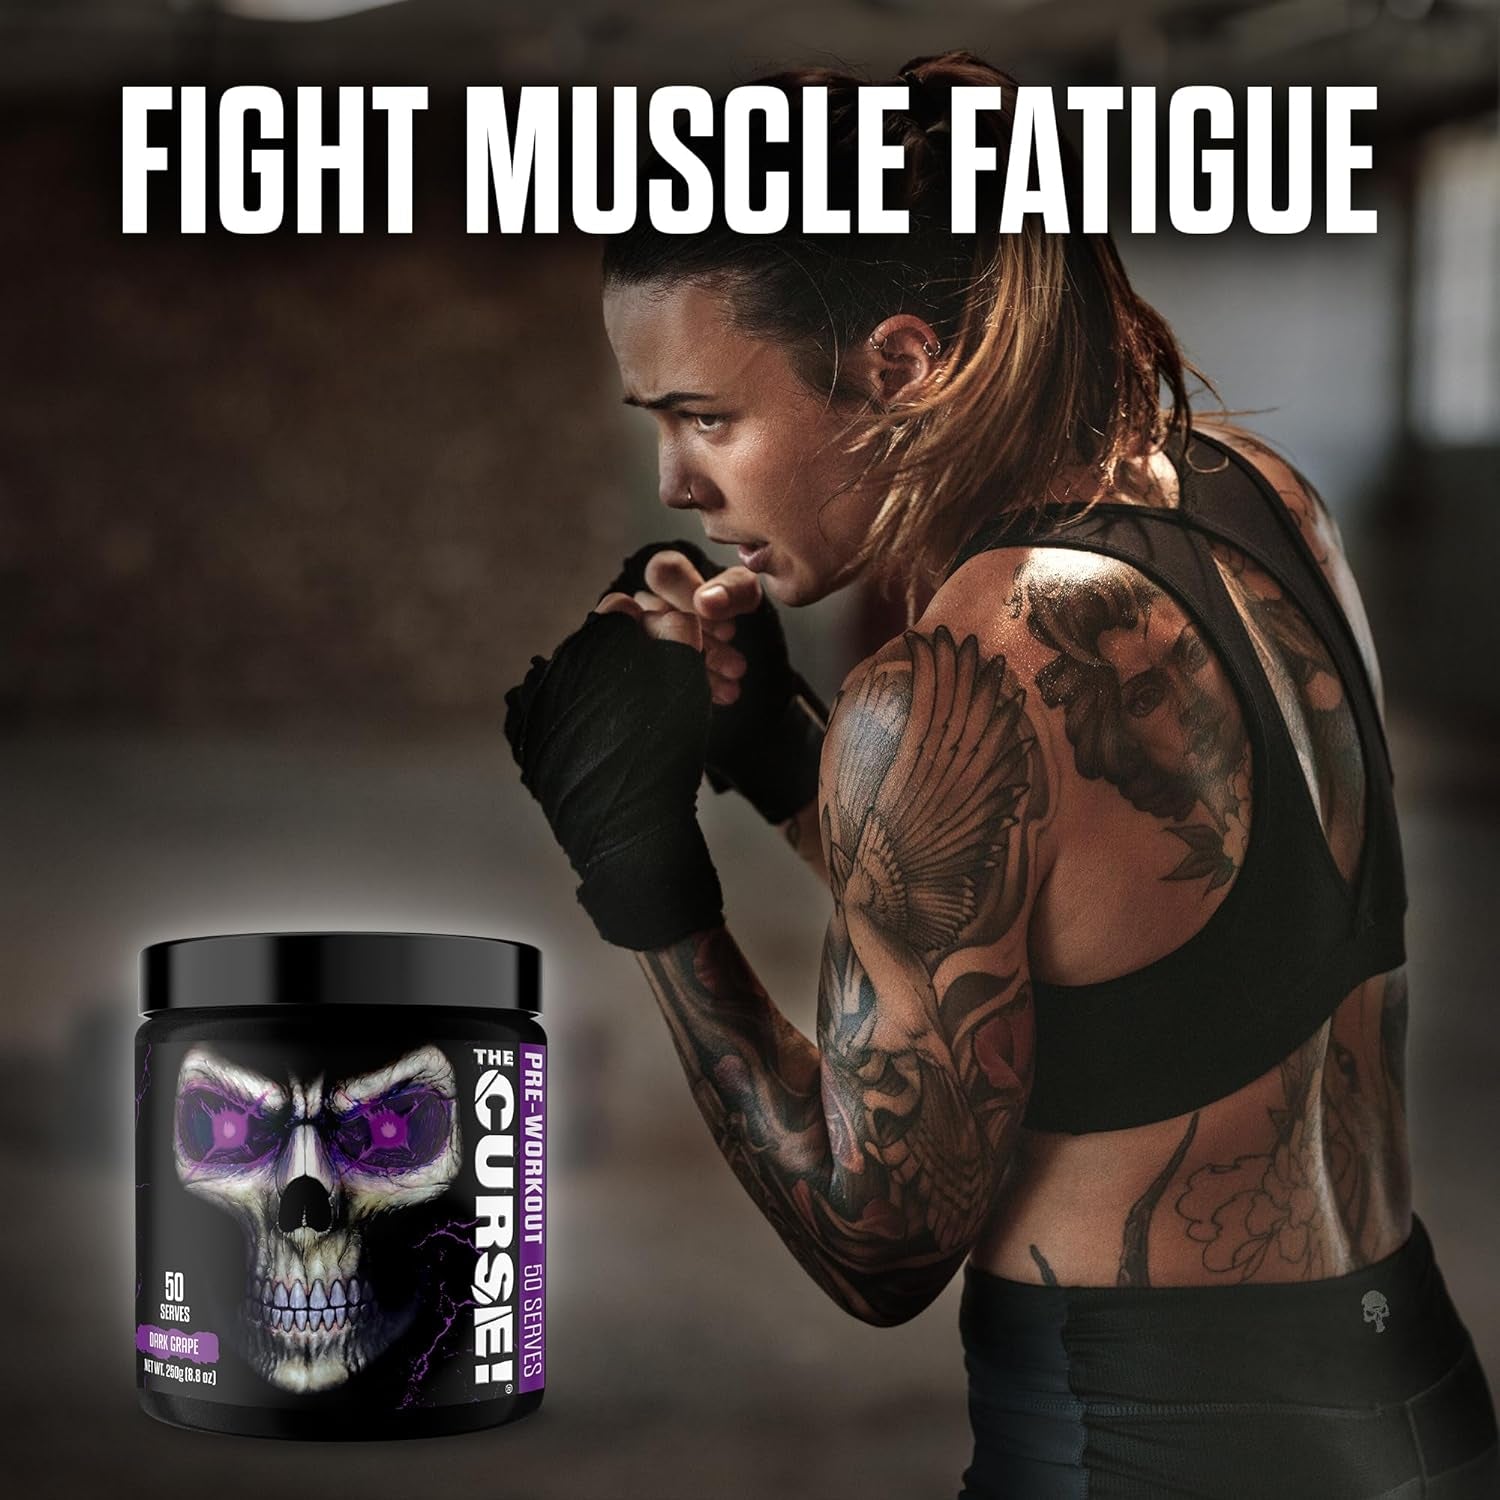 the Curse! Pre Workout Powder - Dark Grape 50 Servings | Preworkout: Boost Strength, Energy + Focus for Men & Women | Caffeine, Beta-Alanine, Creatine & L-Citrulline